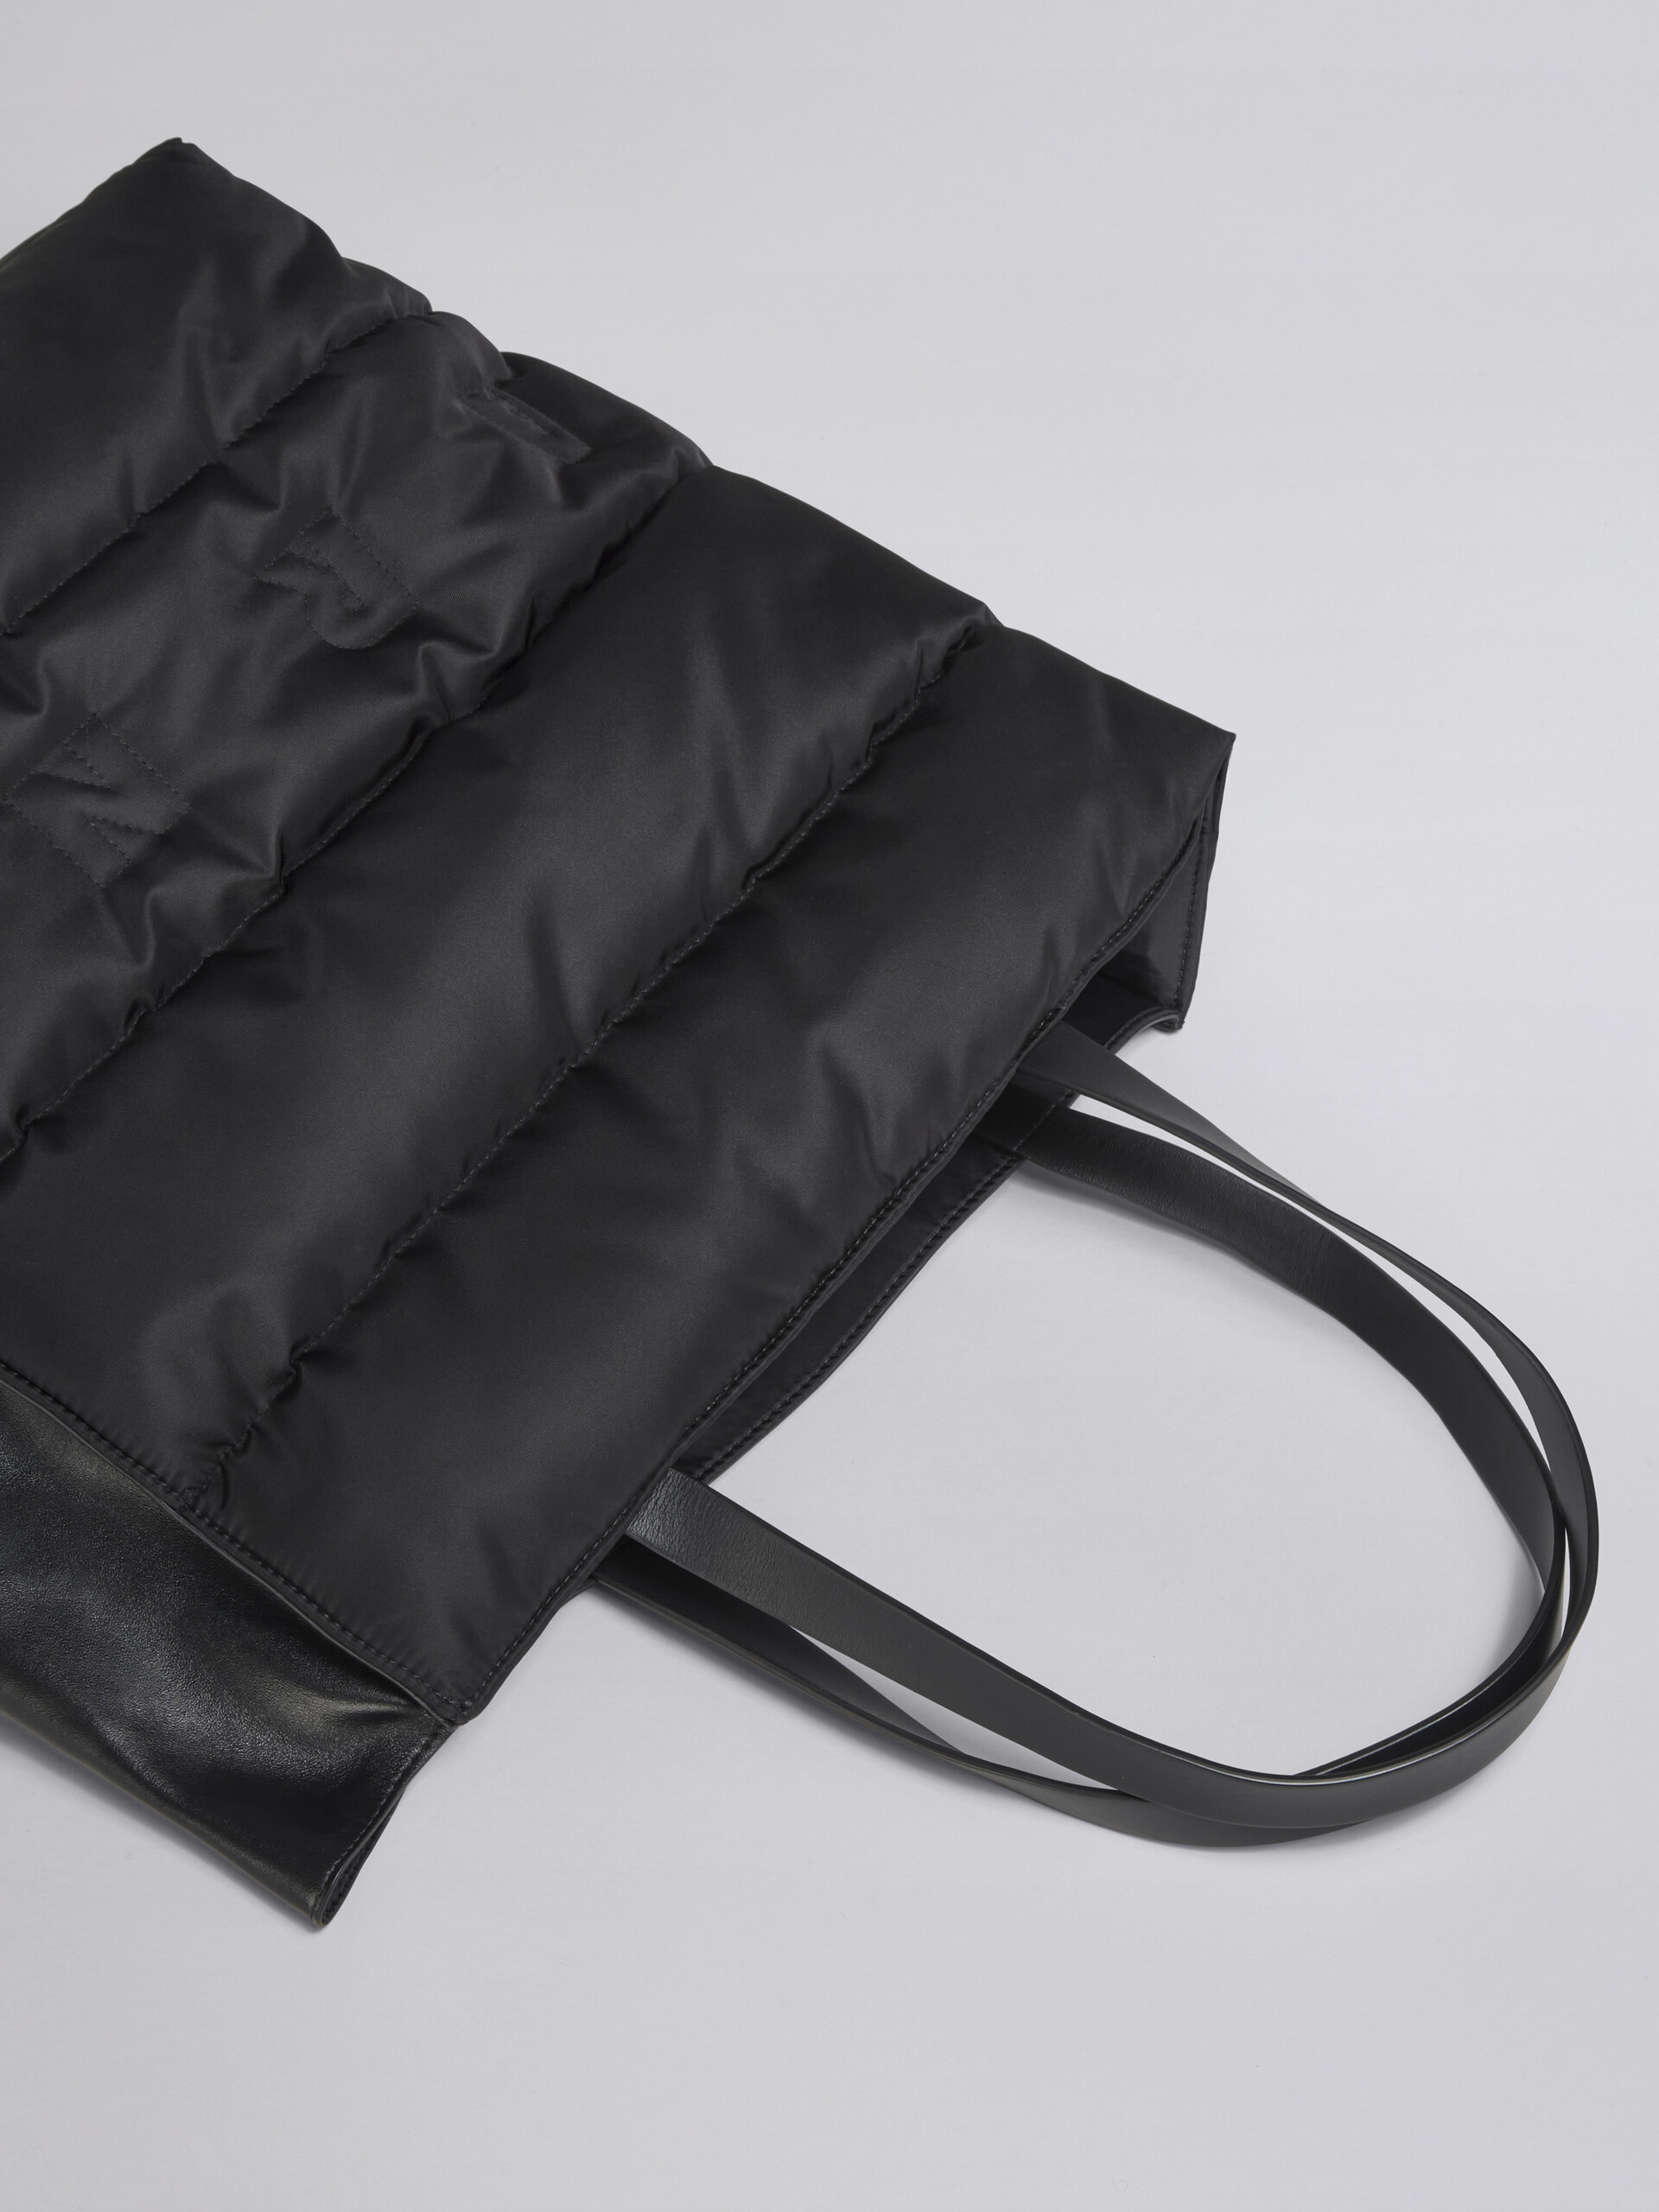 MUSEO SOFT small bag in black nylon